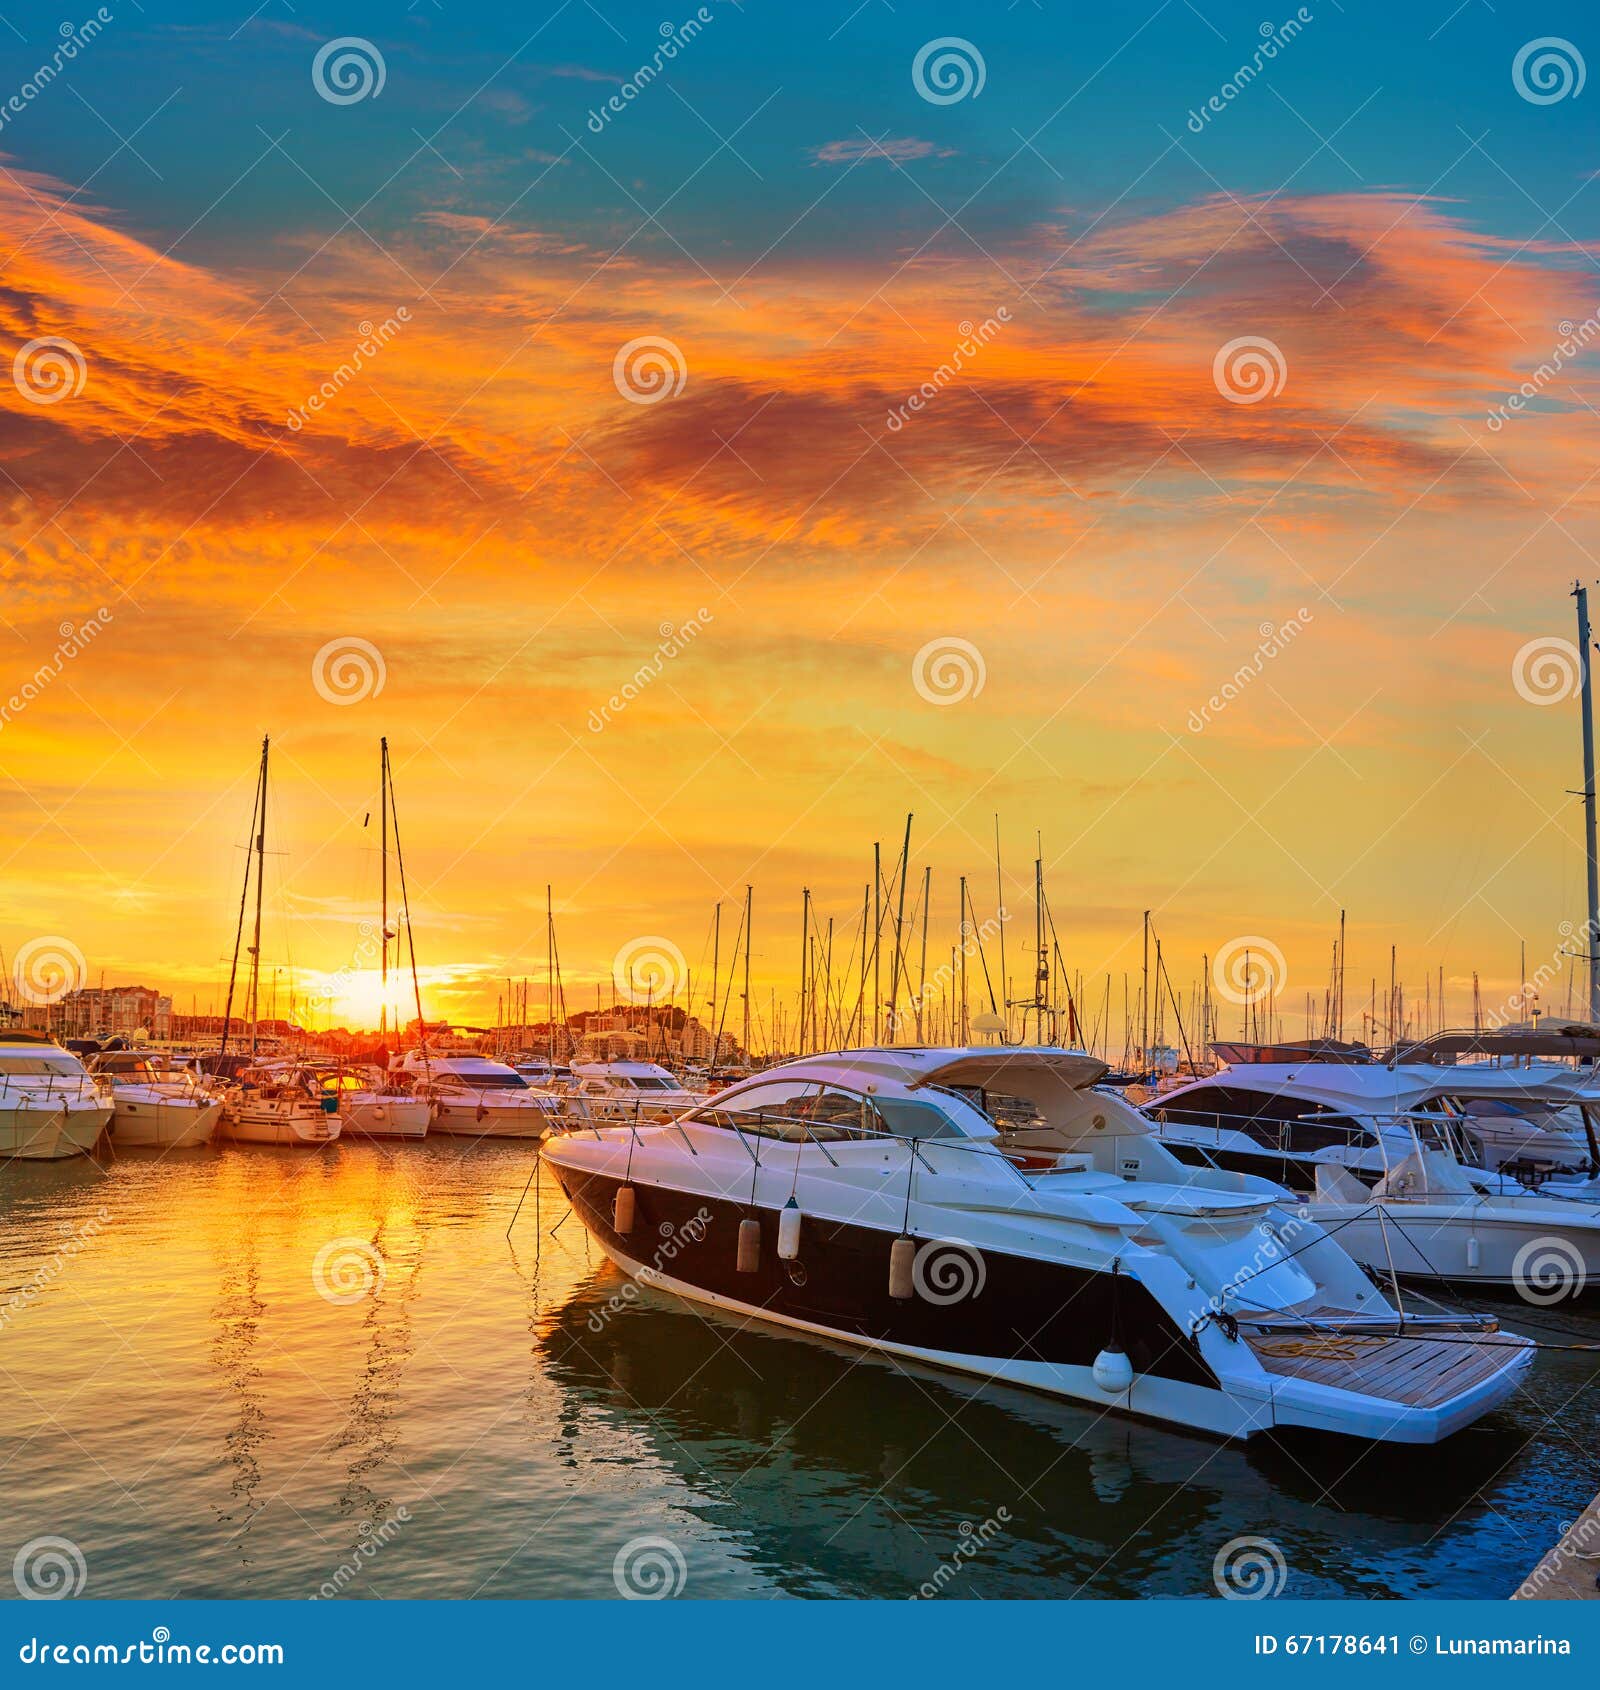 denia sunset in marina boats mediterranean spain